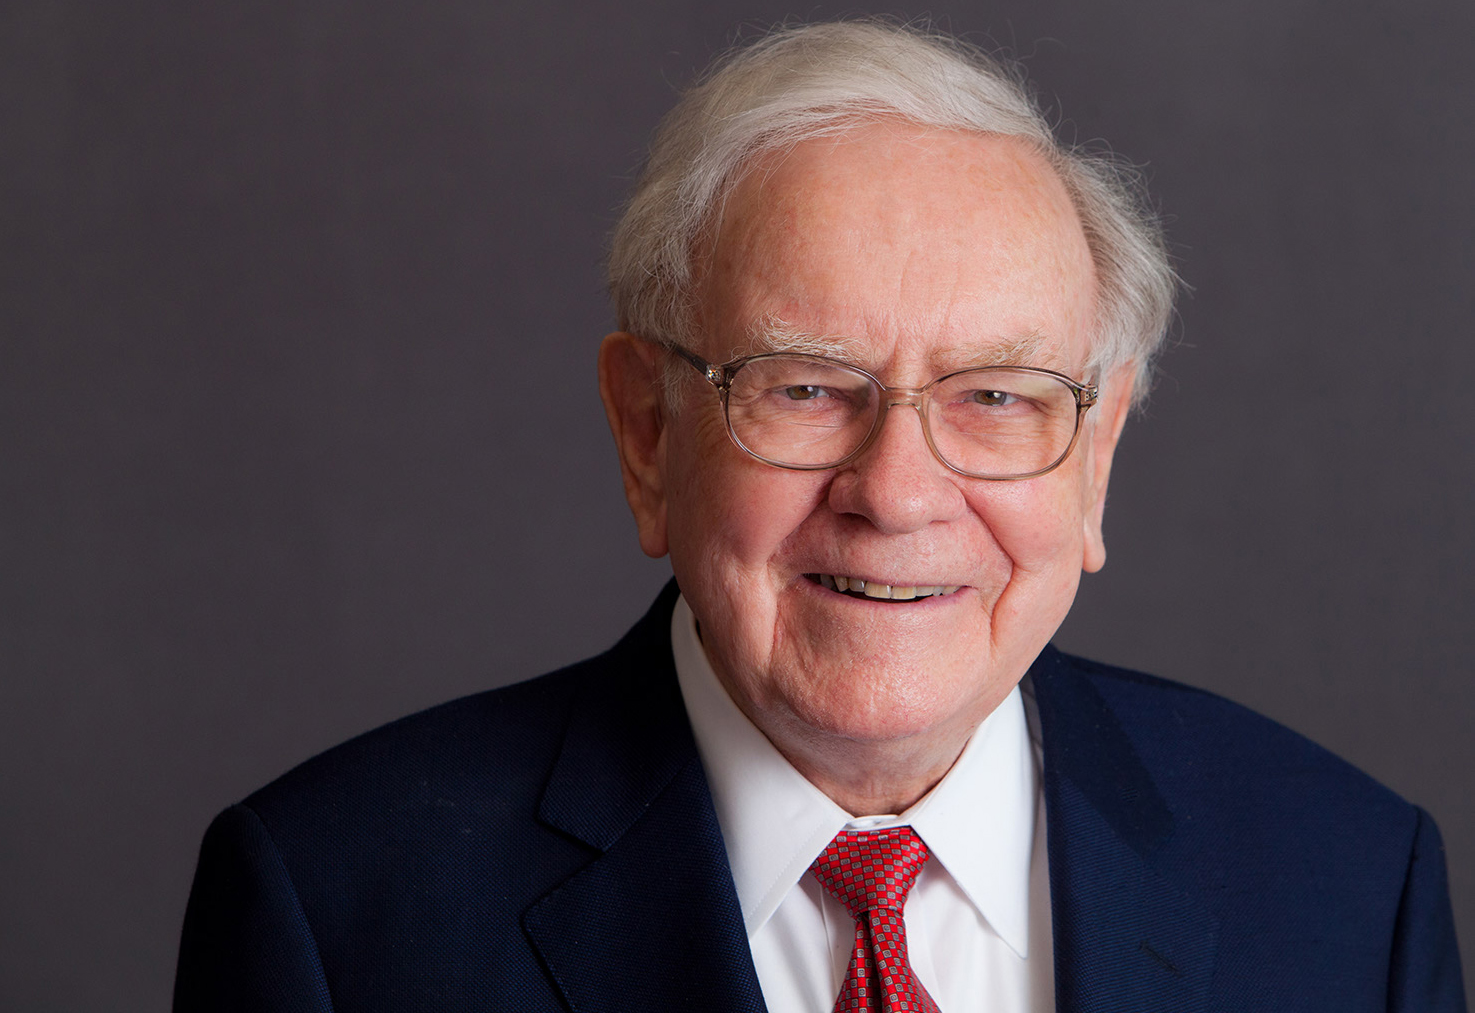 Philanthropist Warren Buffet